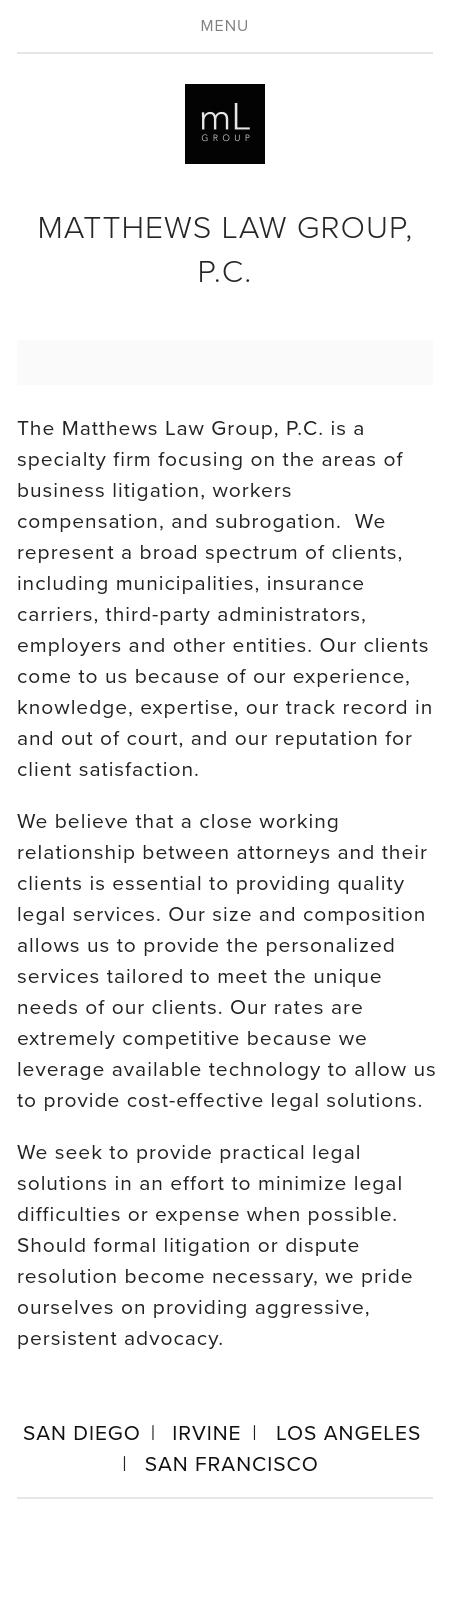 Matthews Law Group, P.C. - San Diego CA Lawyers